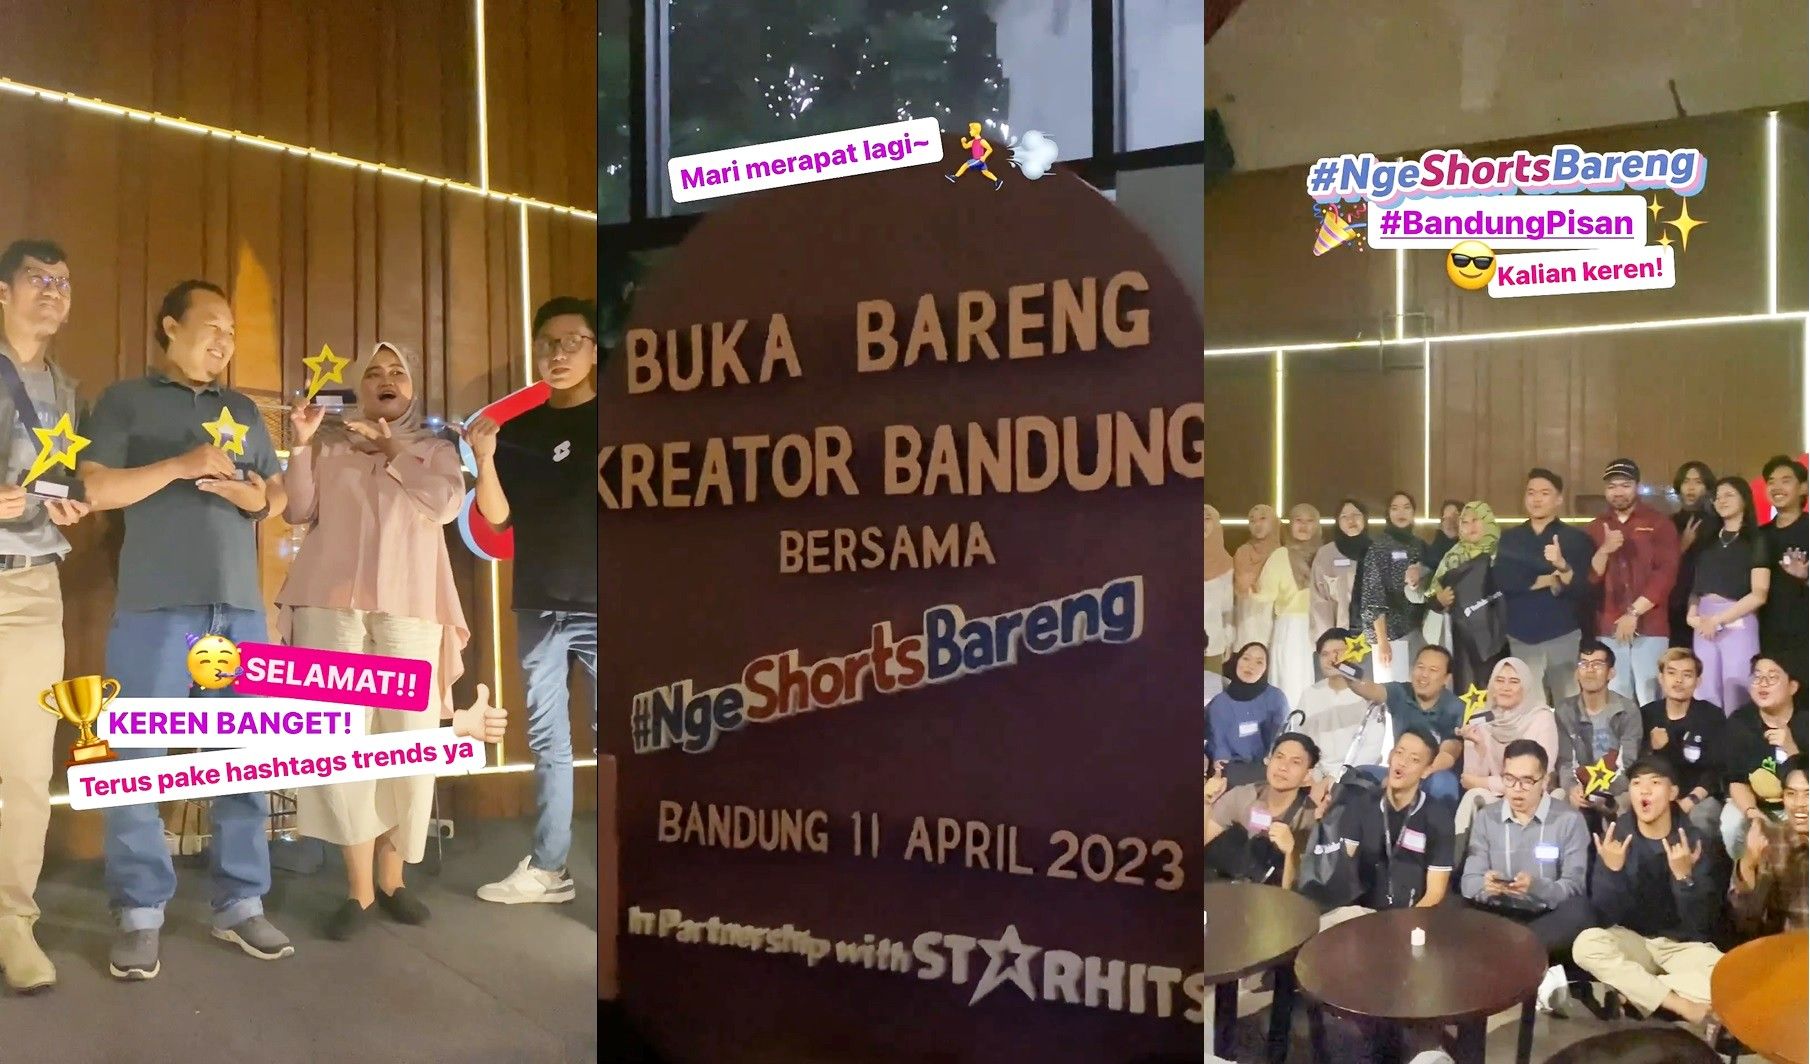 #NgeShortsBareng Balik Lagi ke Bandung Lewat Event Buka Bareng Komunitas Kreator! Hadirkan LuqmanRV Hingga Iggy Dzu!